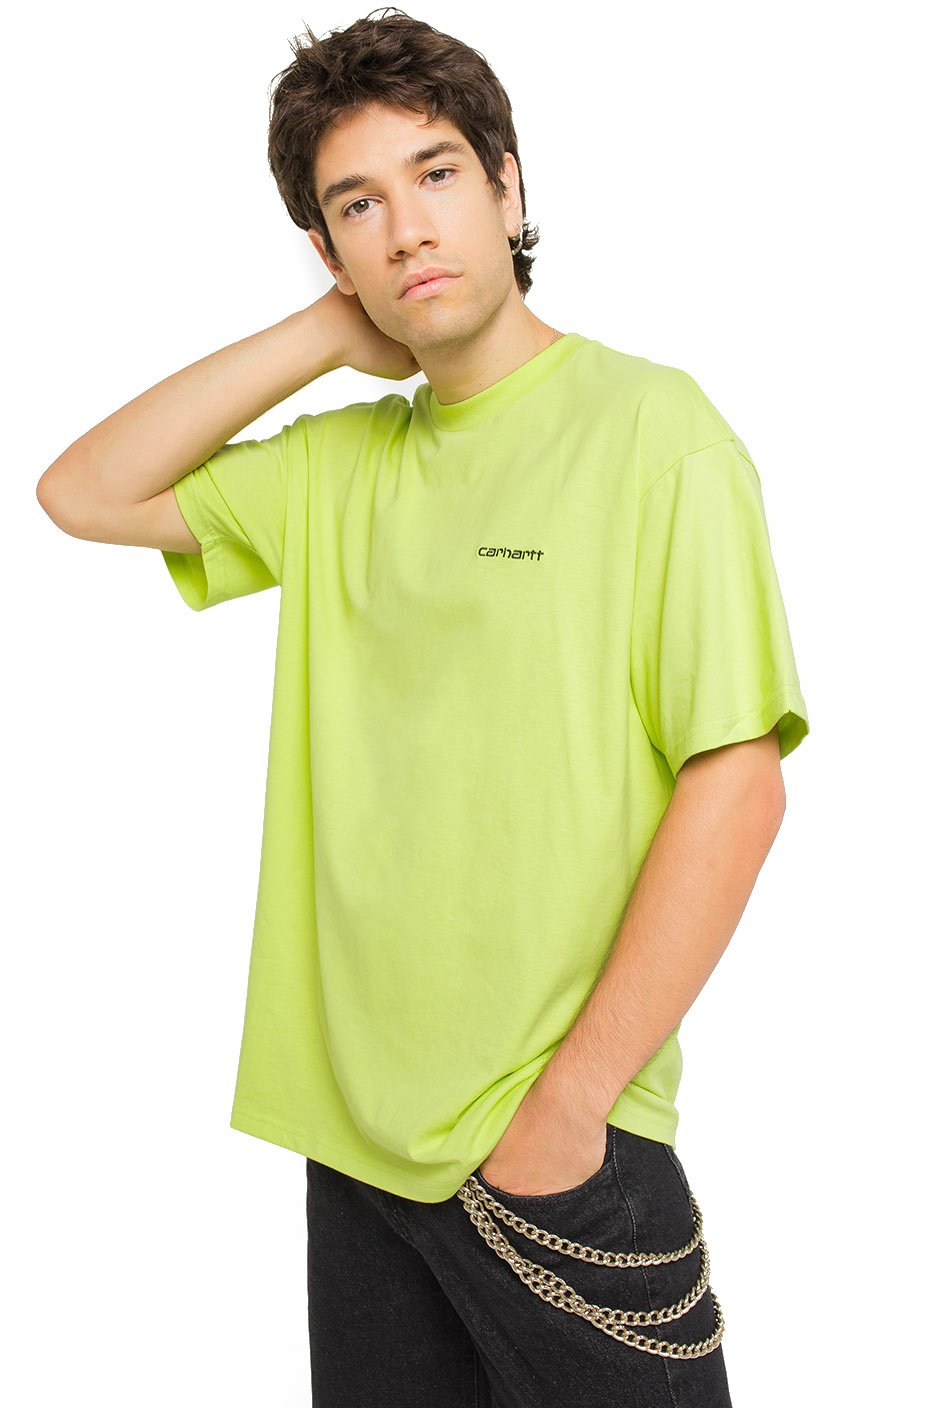 Carhartt Pocket T-Shirt Powdery